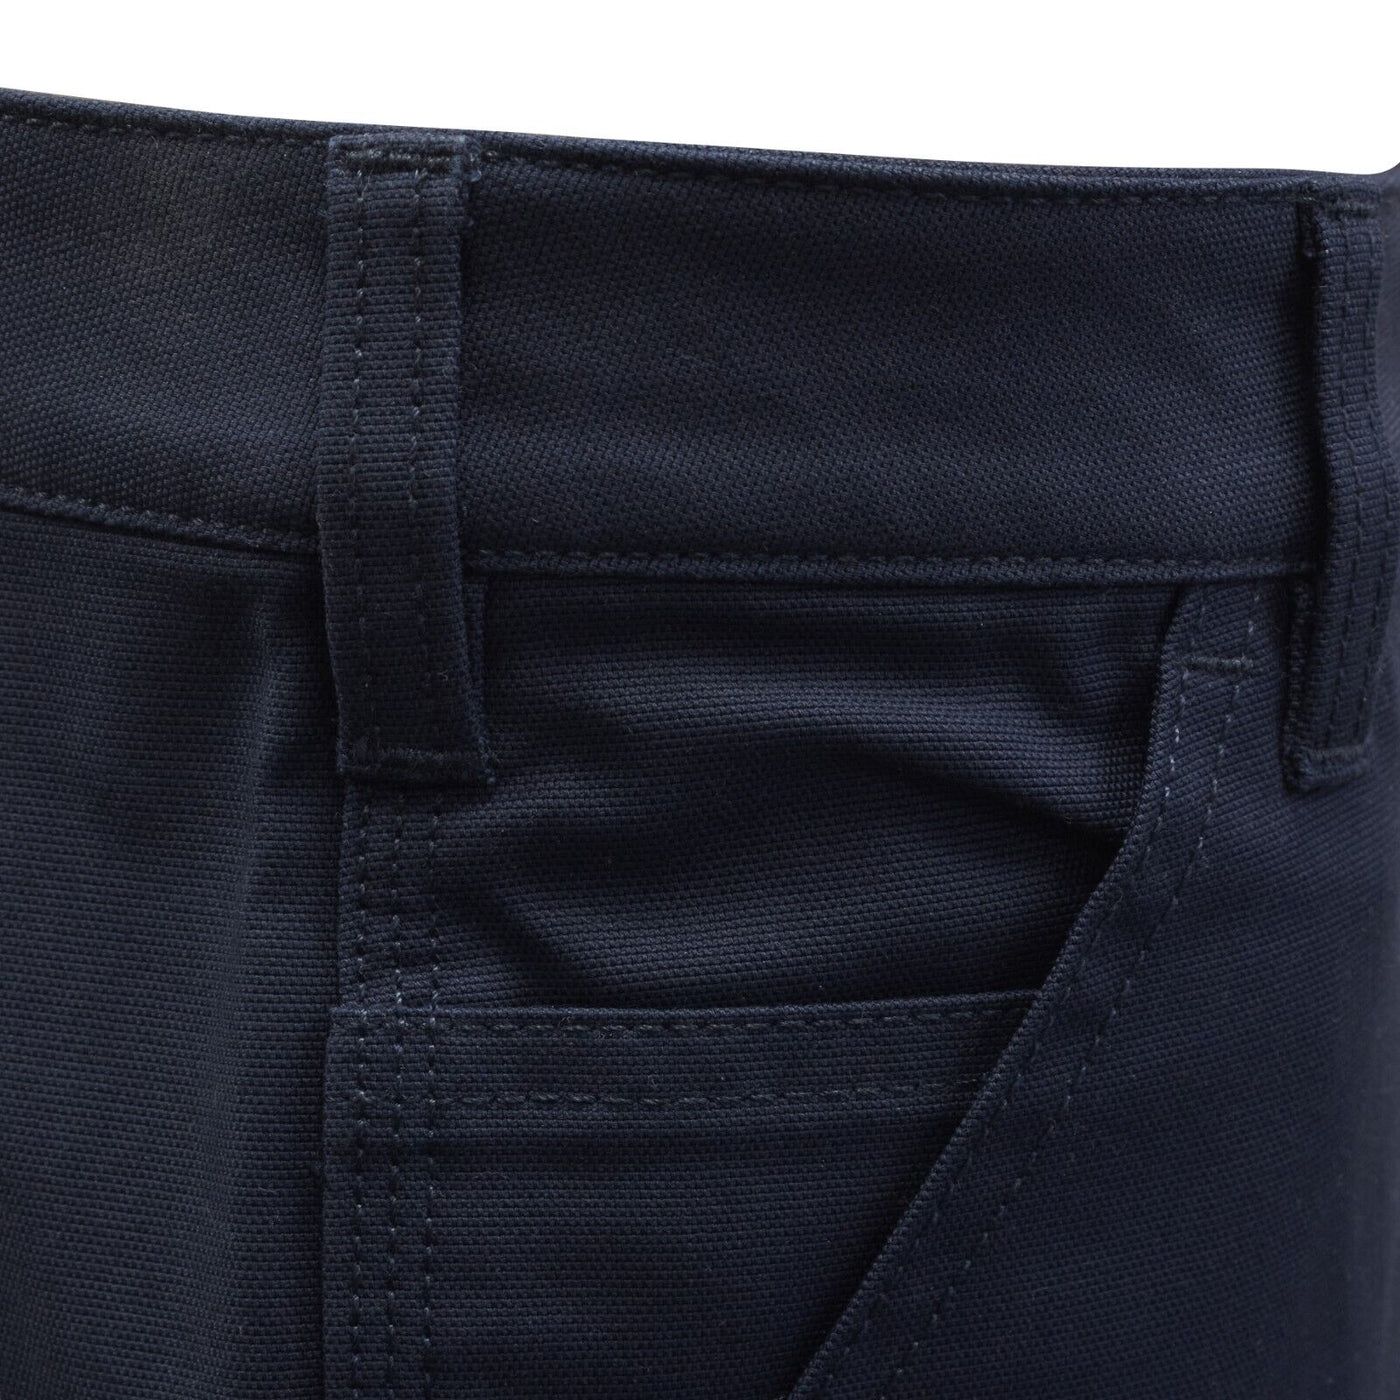 Carhartt Women's Navy Rugged Flex Chino Pants